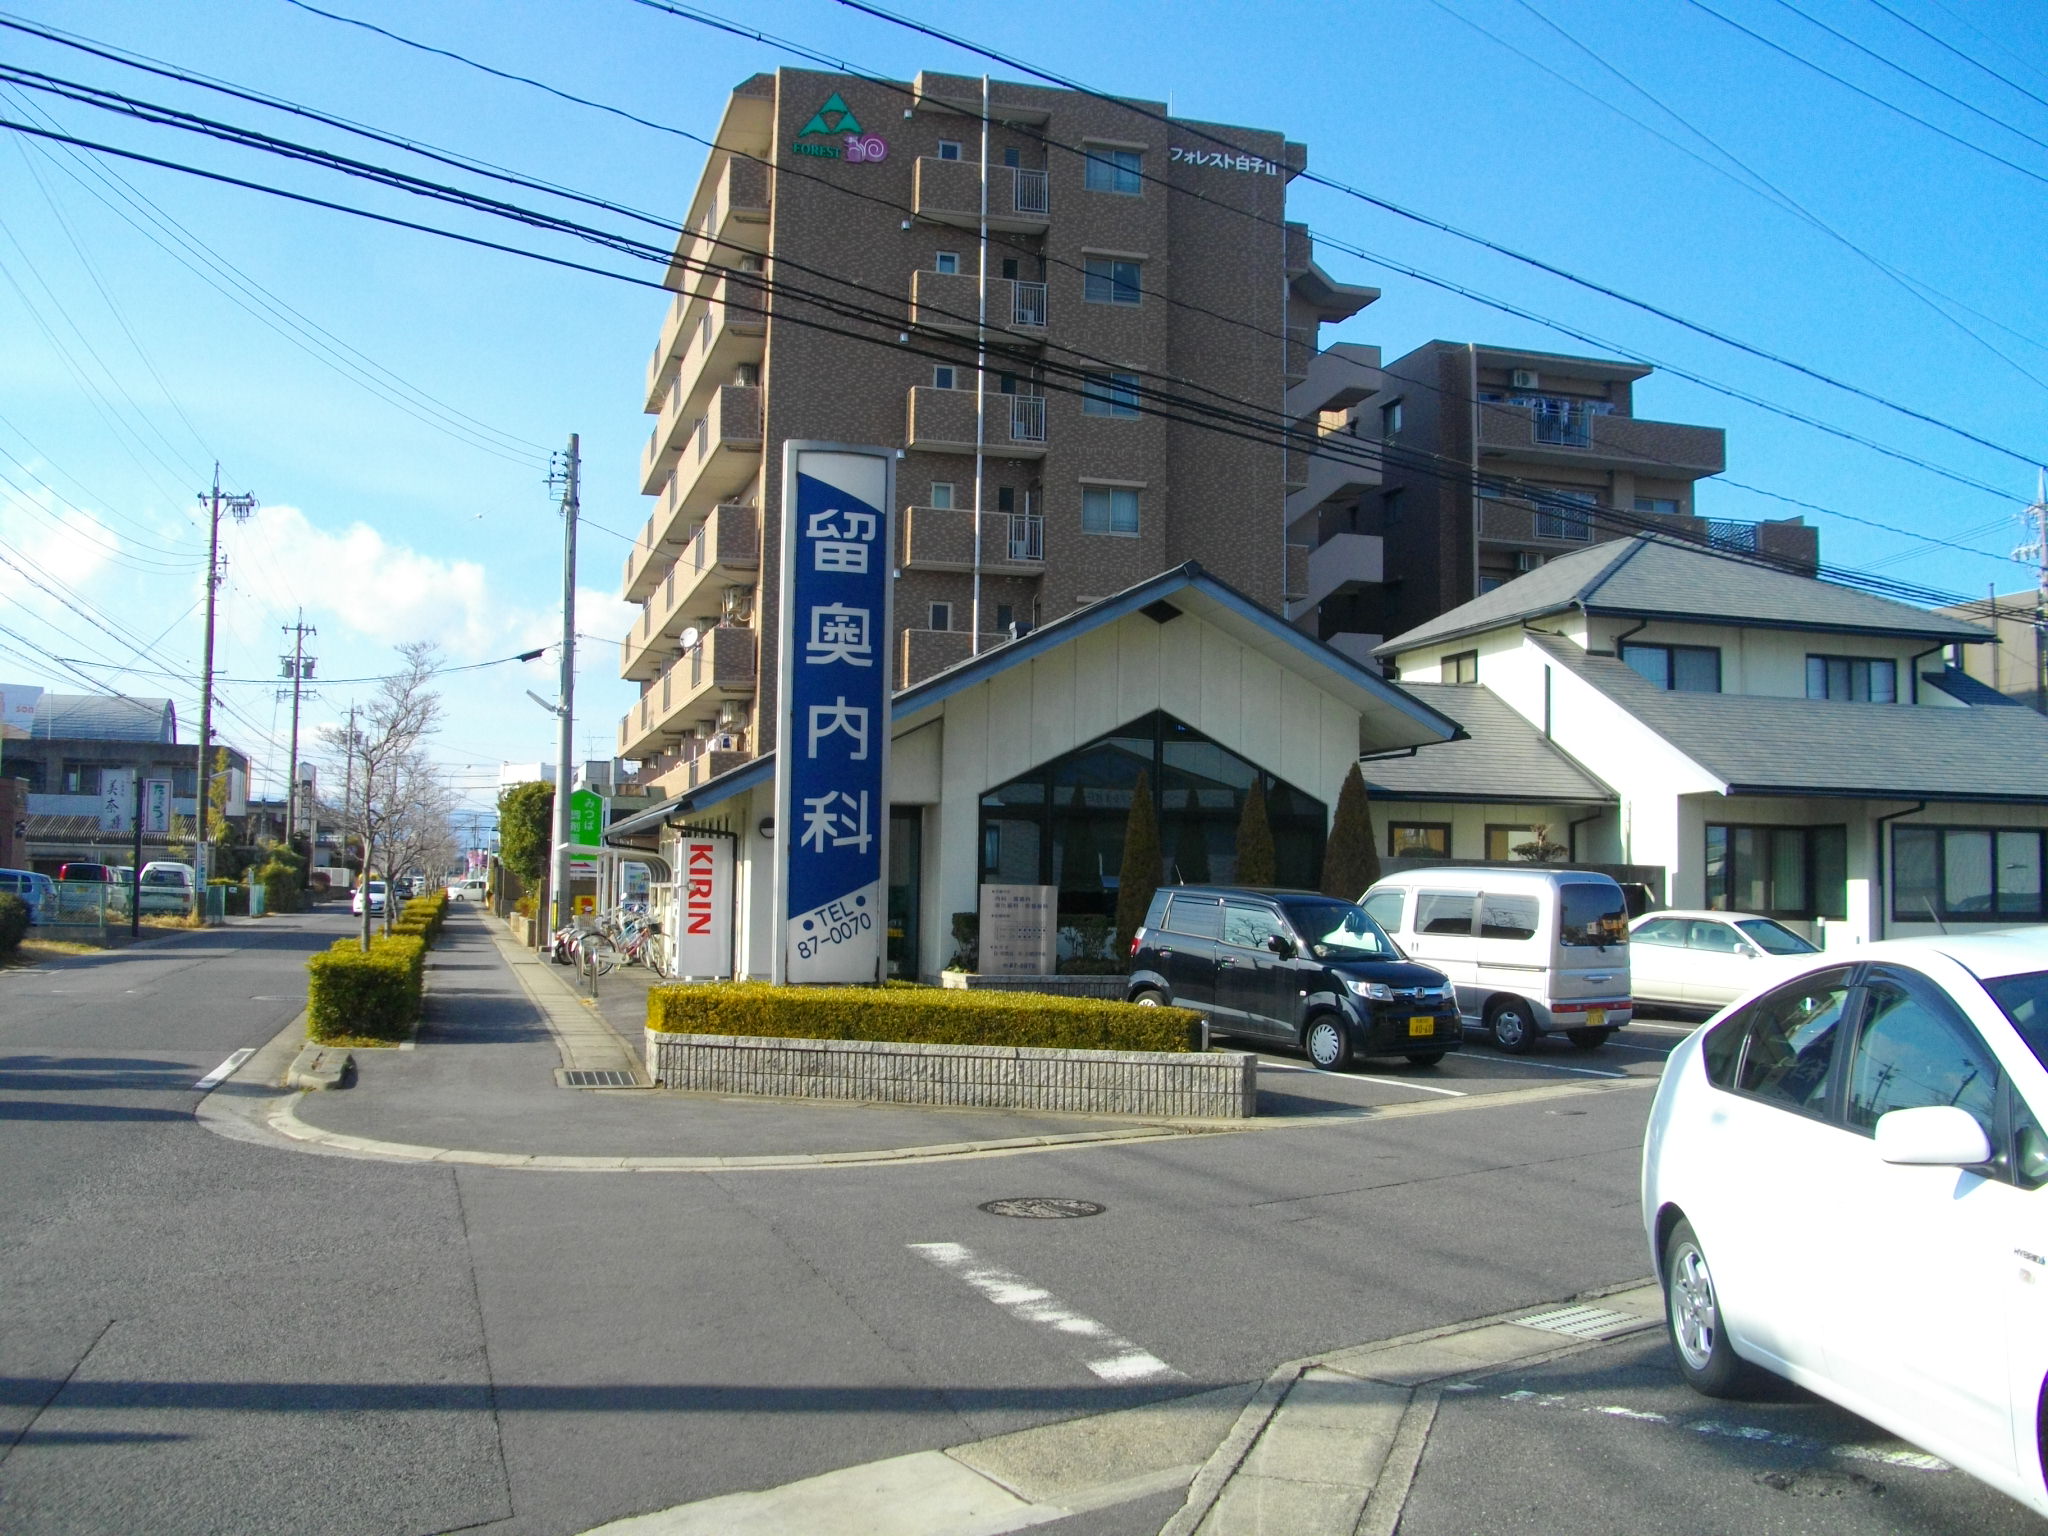 Hospital. Tomeoku to internal medicine (hospital) 320m